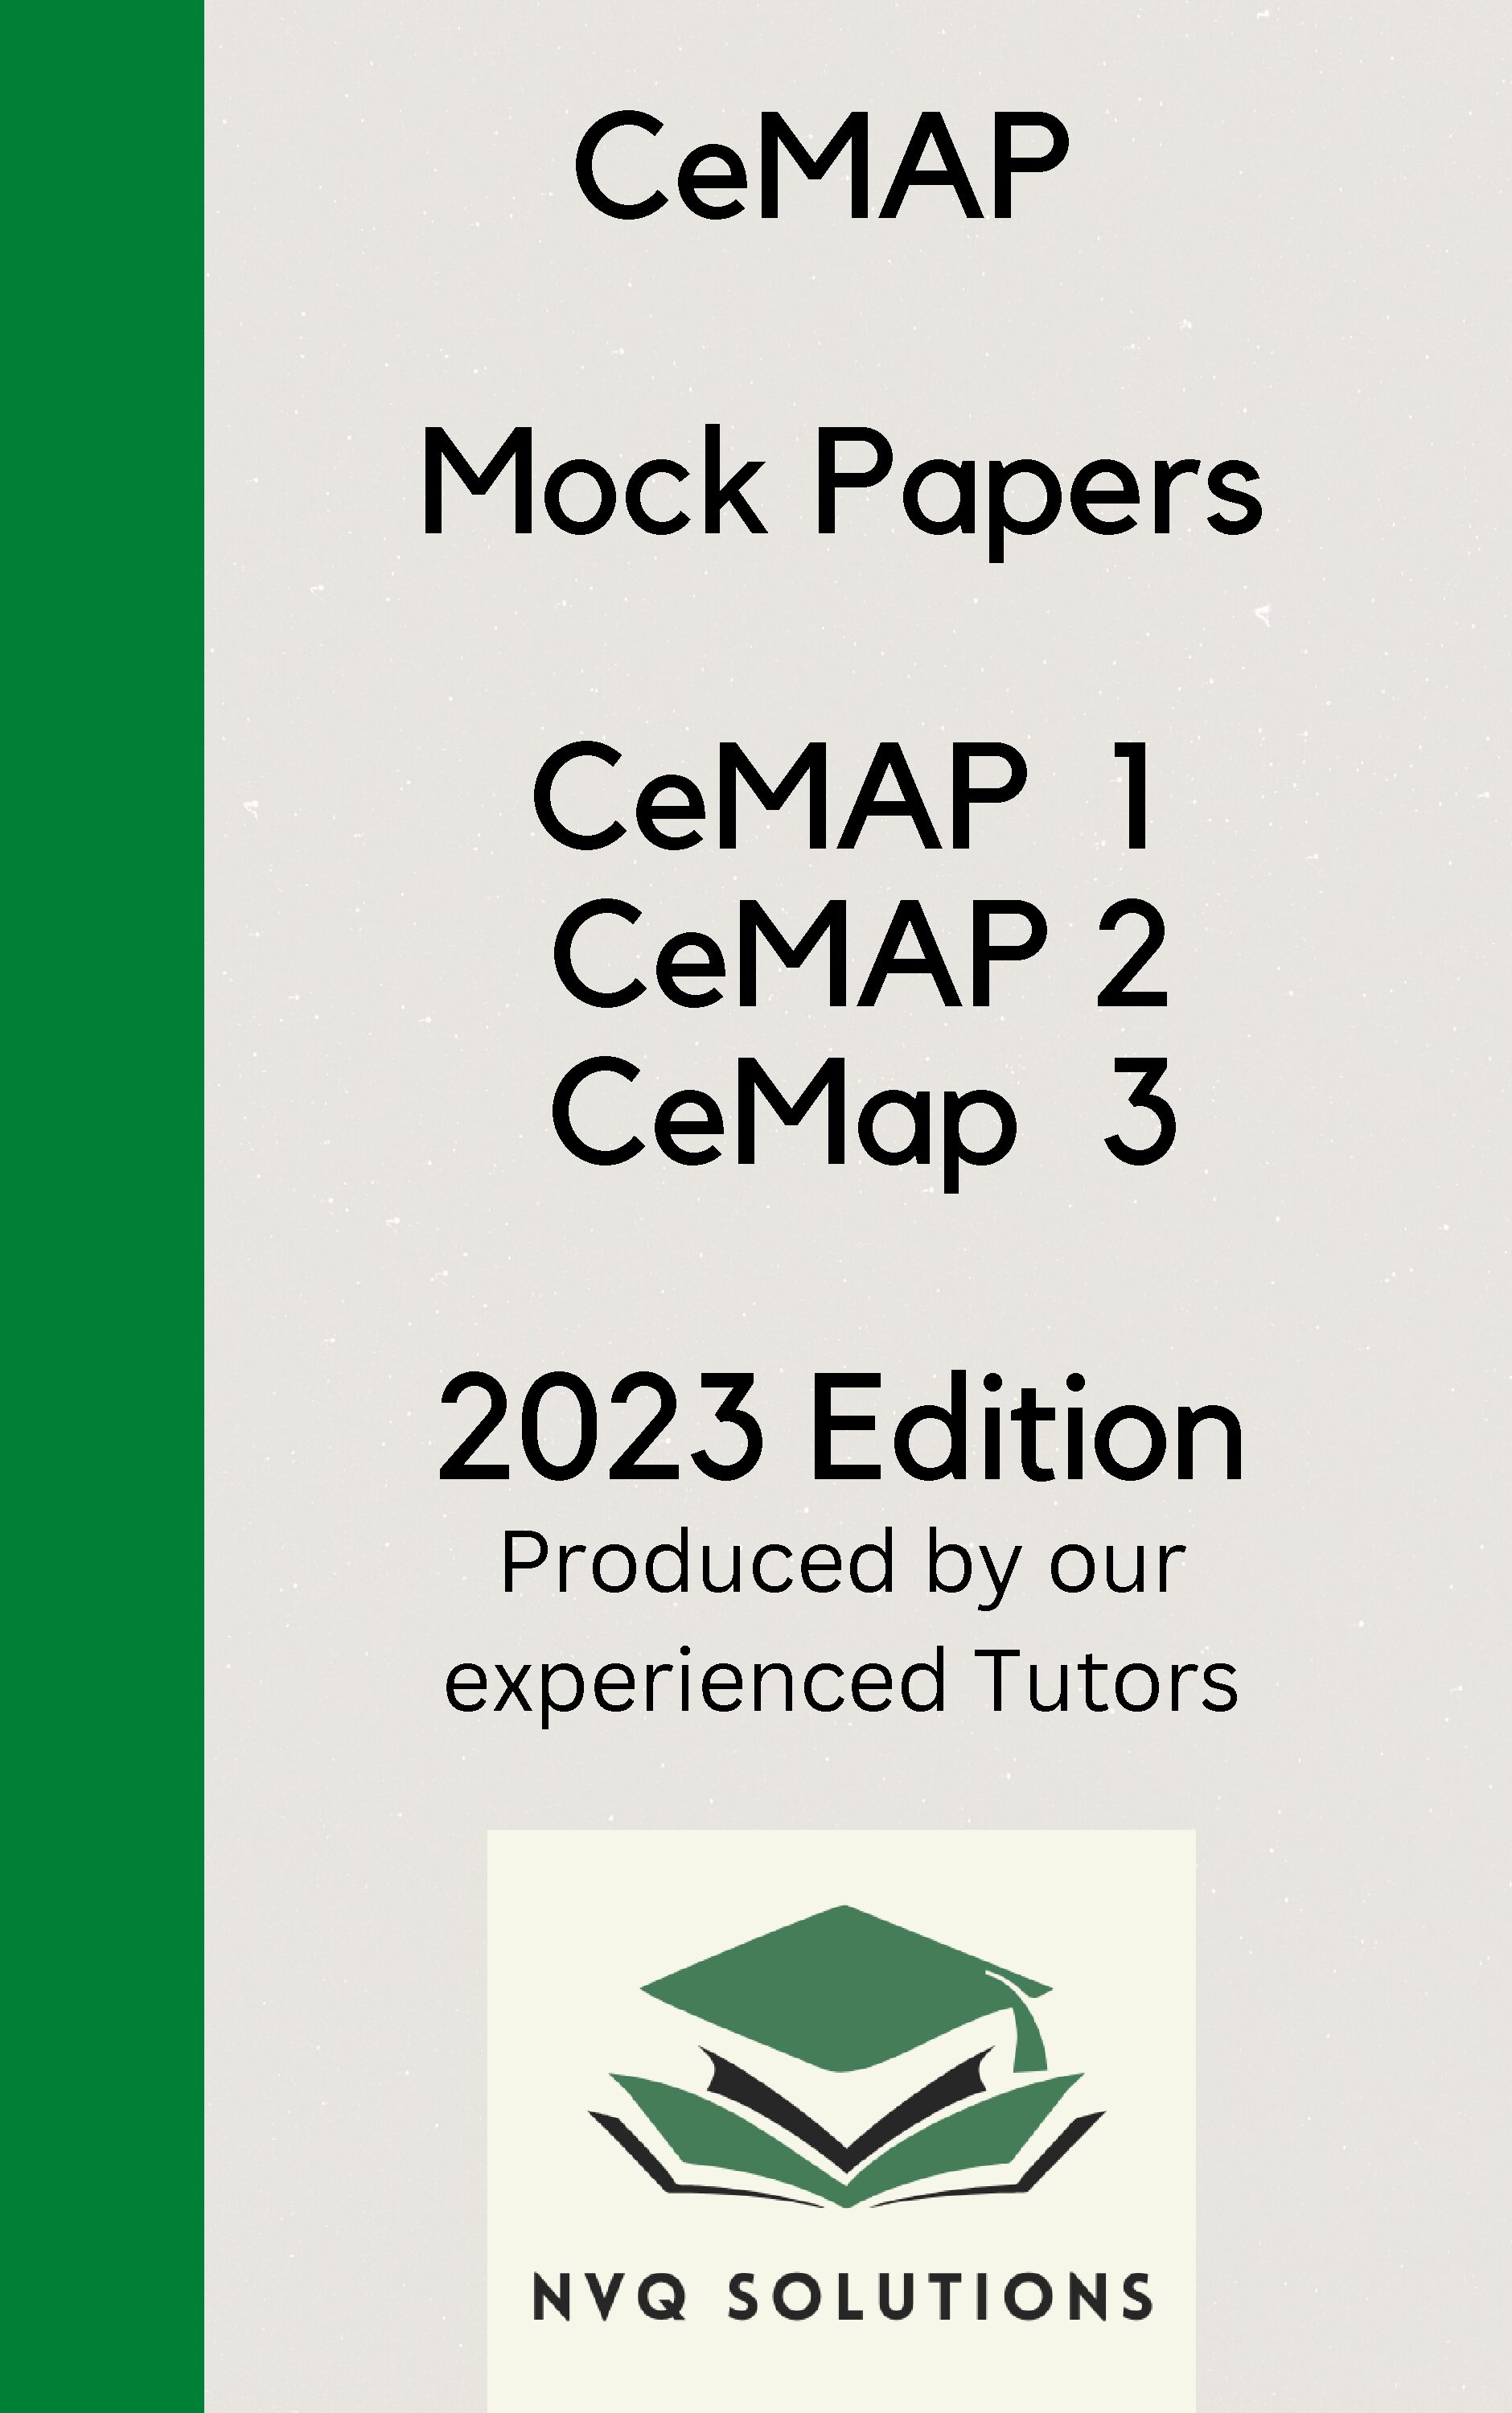 Cemap training books